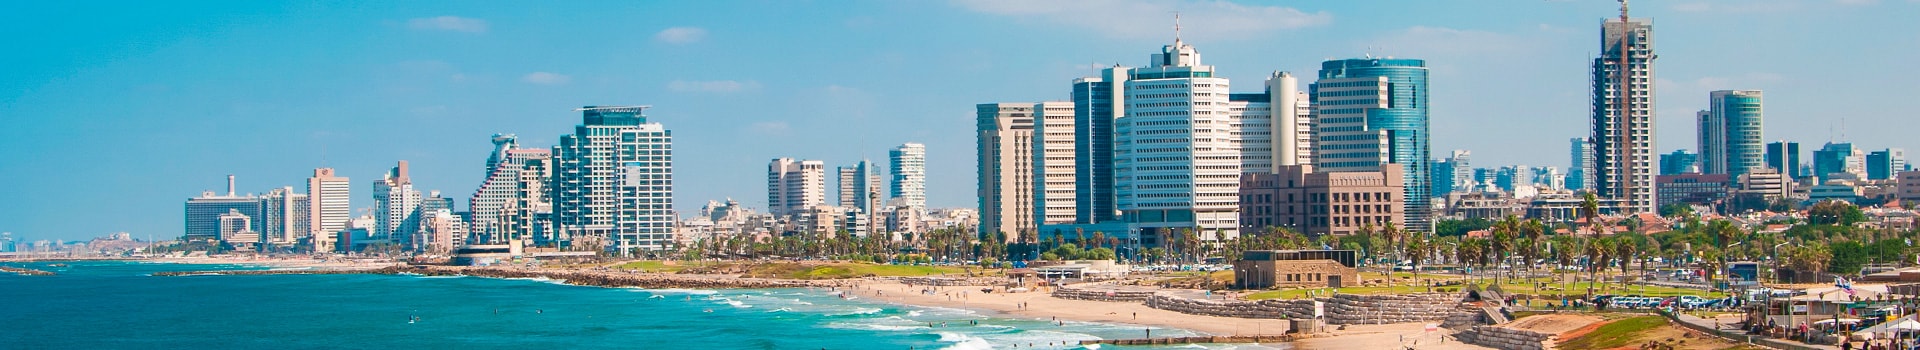 Tenerife - Tel Aviv